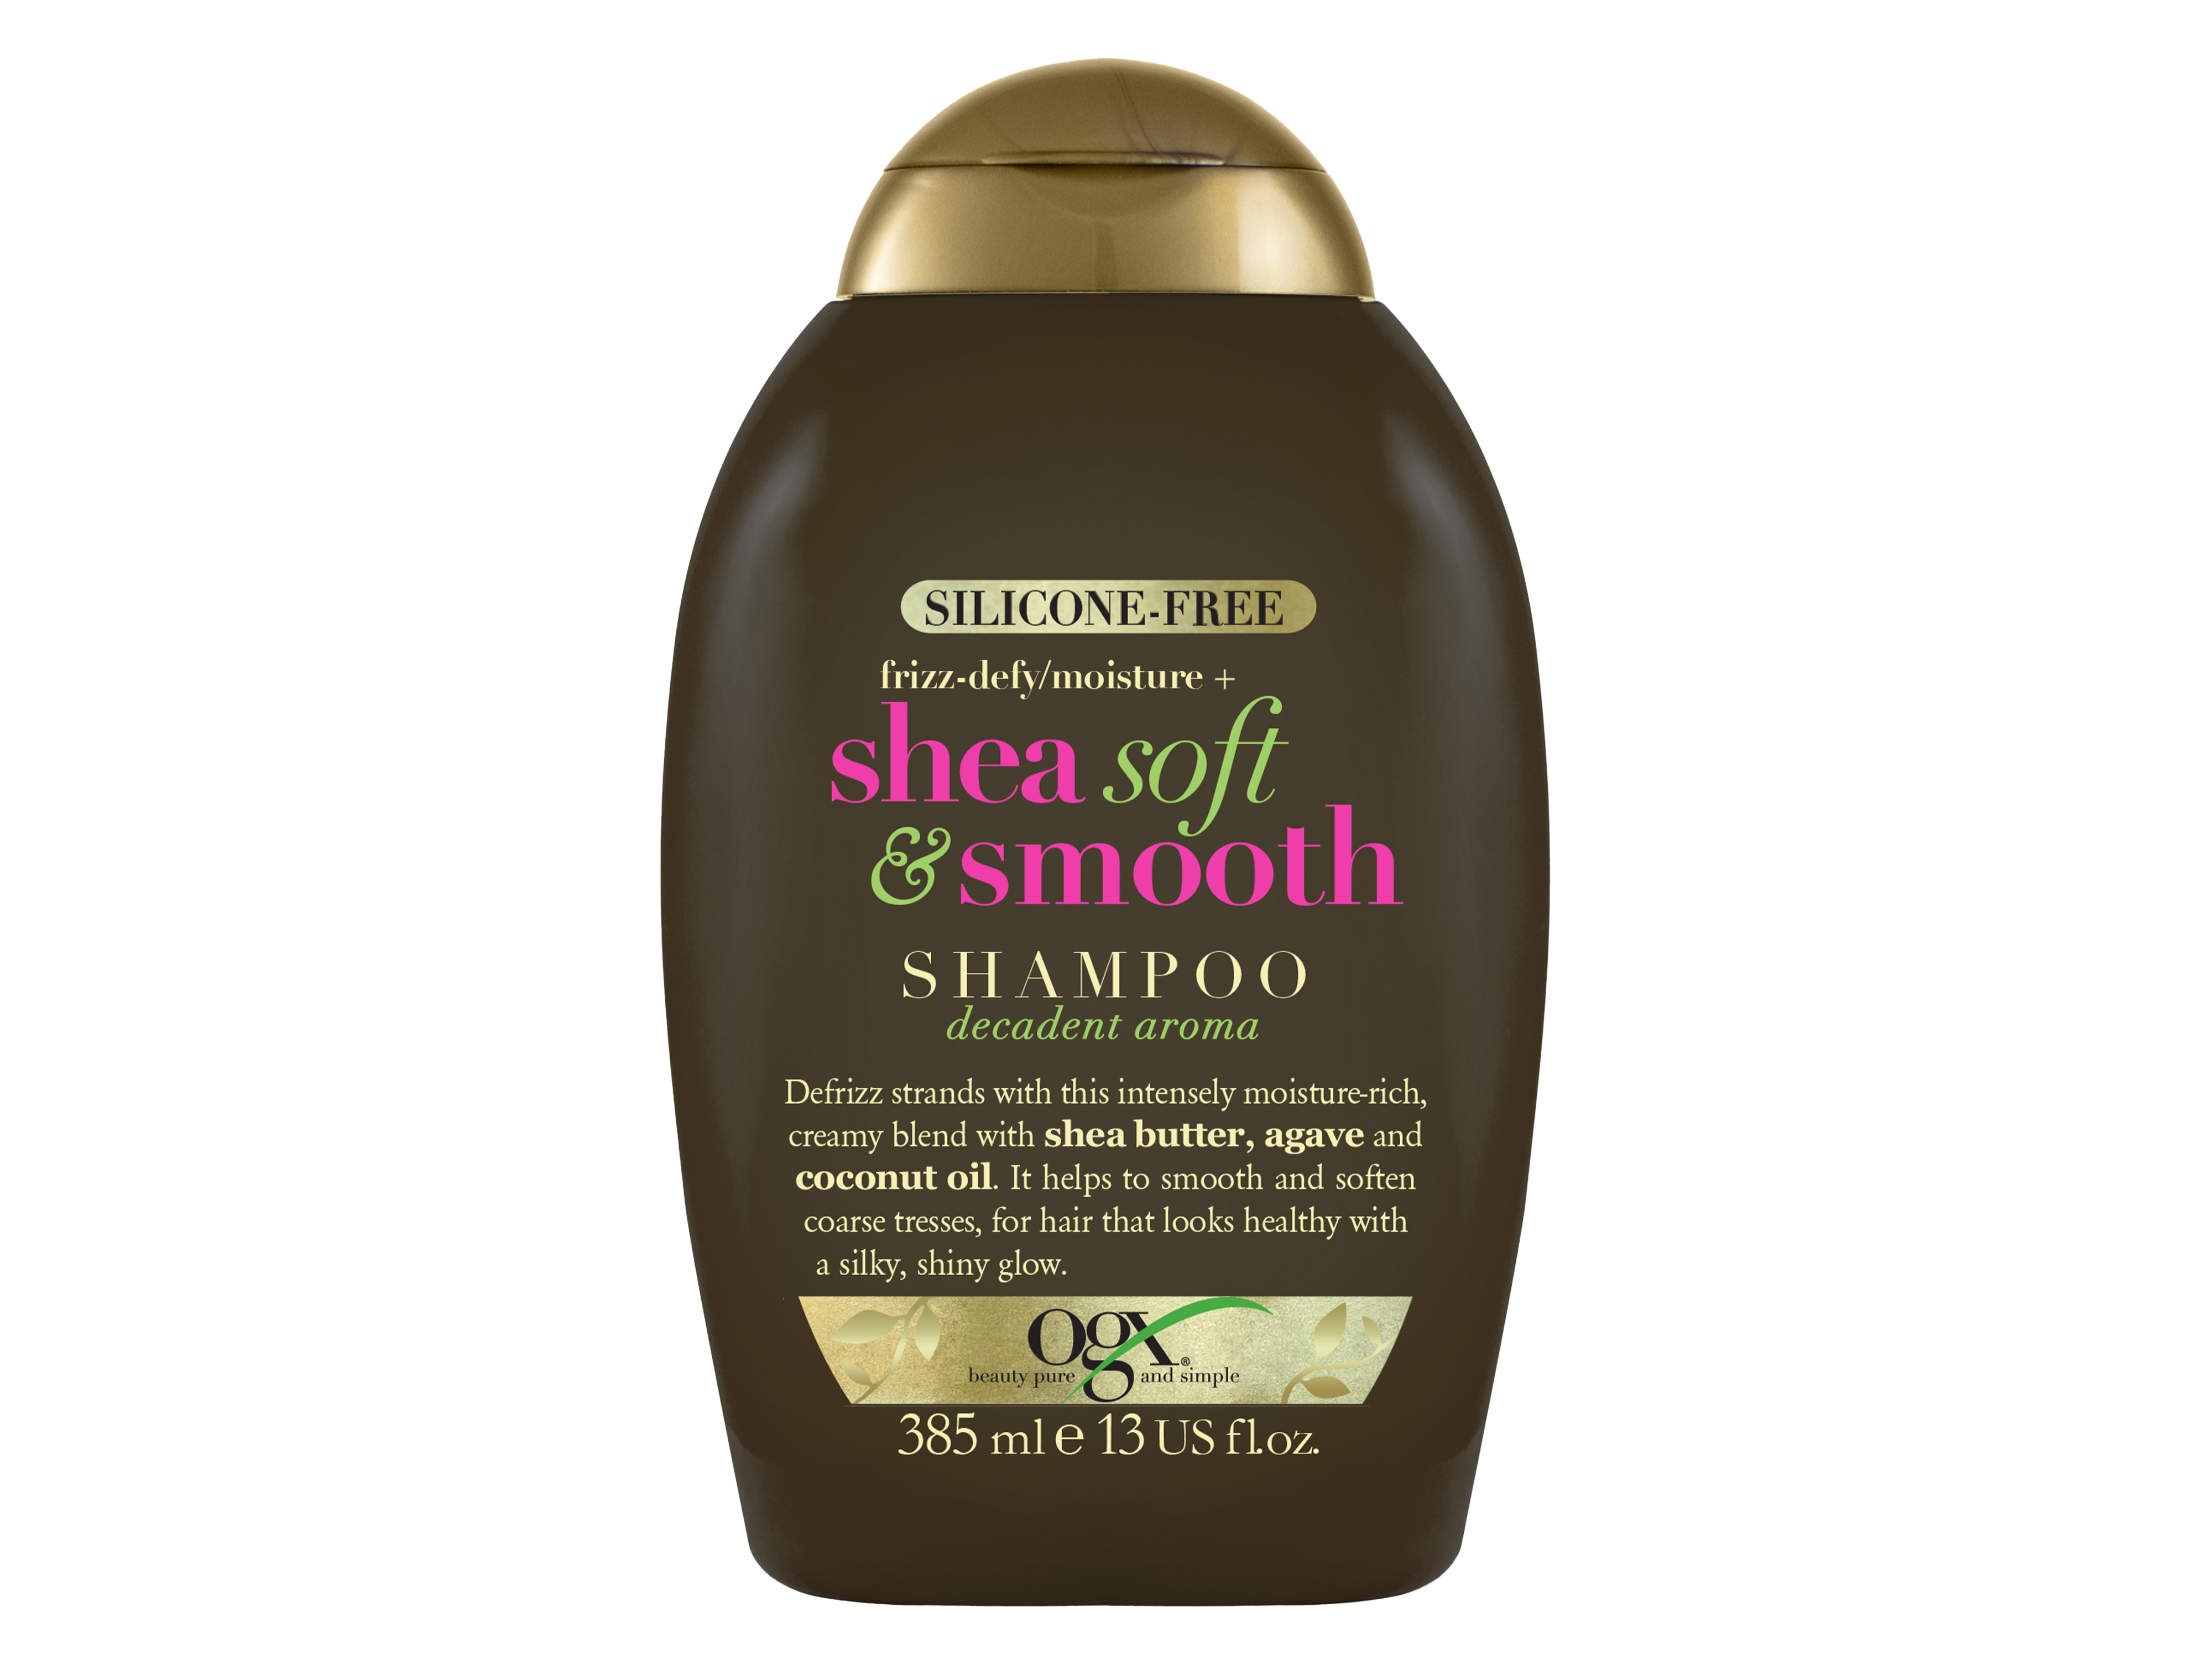 Ogx Shea Soft & Smooth Shampoo, 385 ml